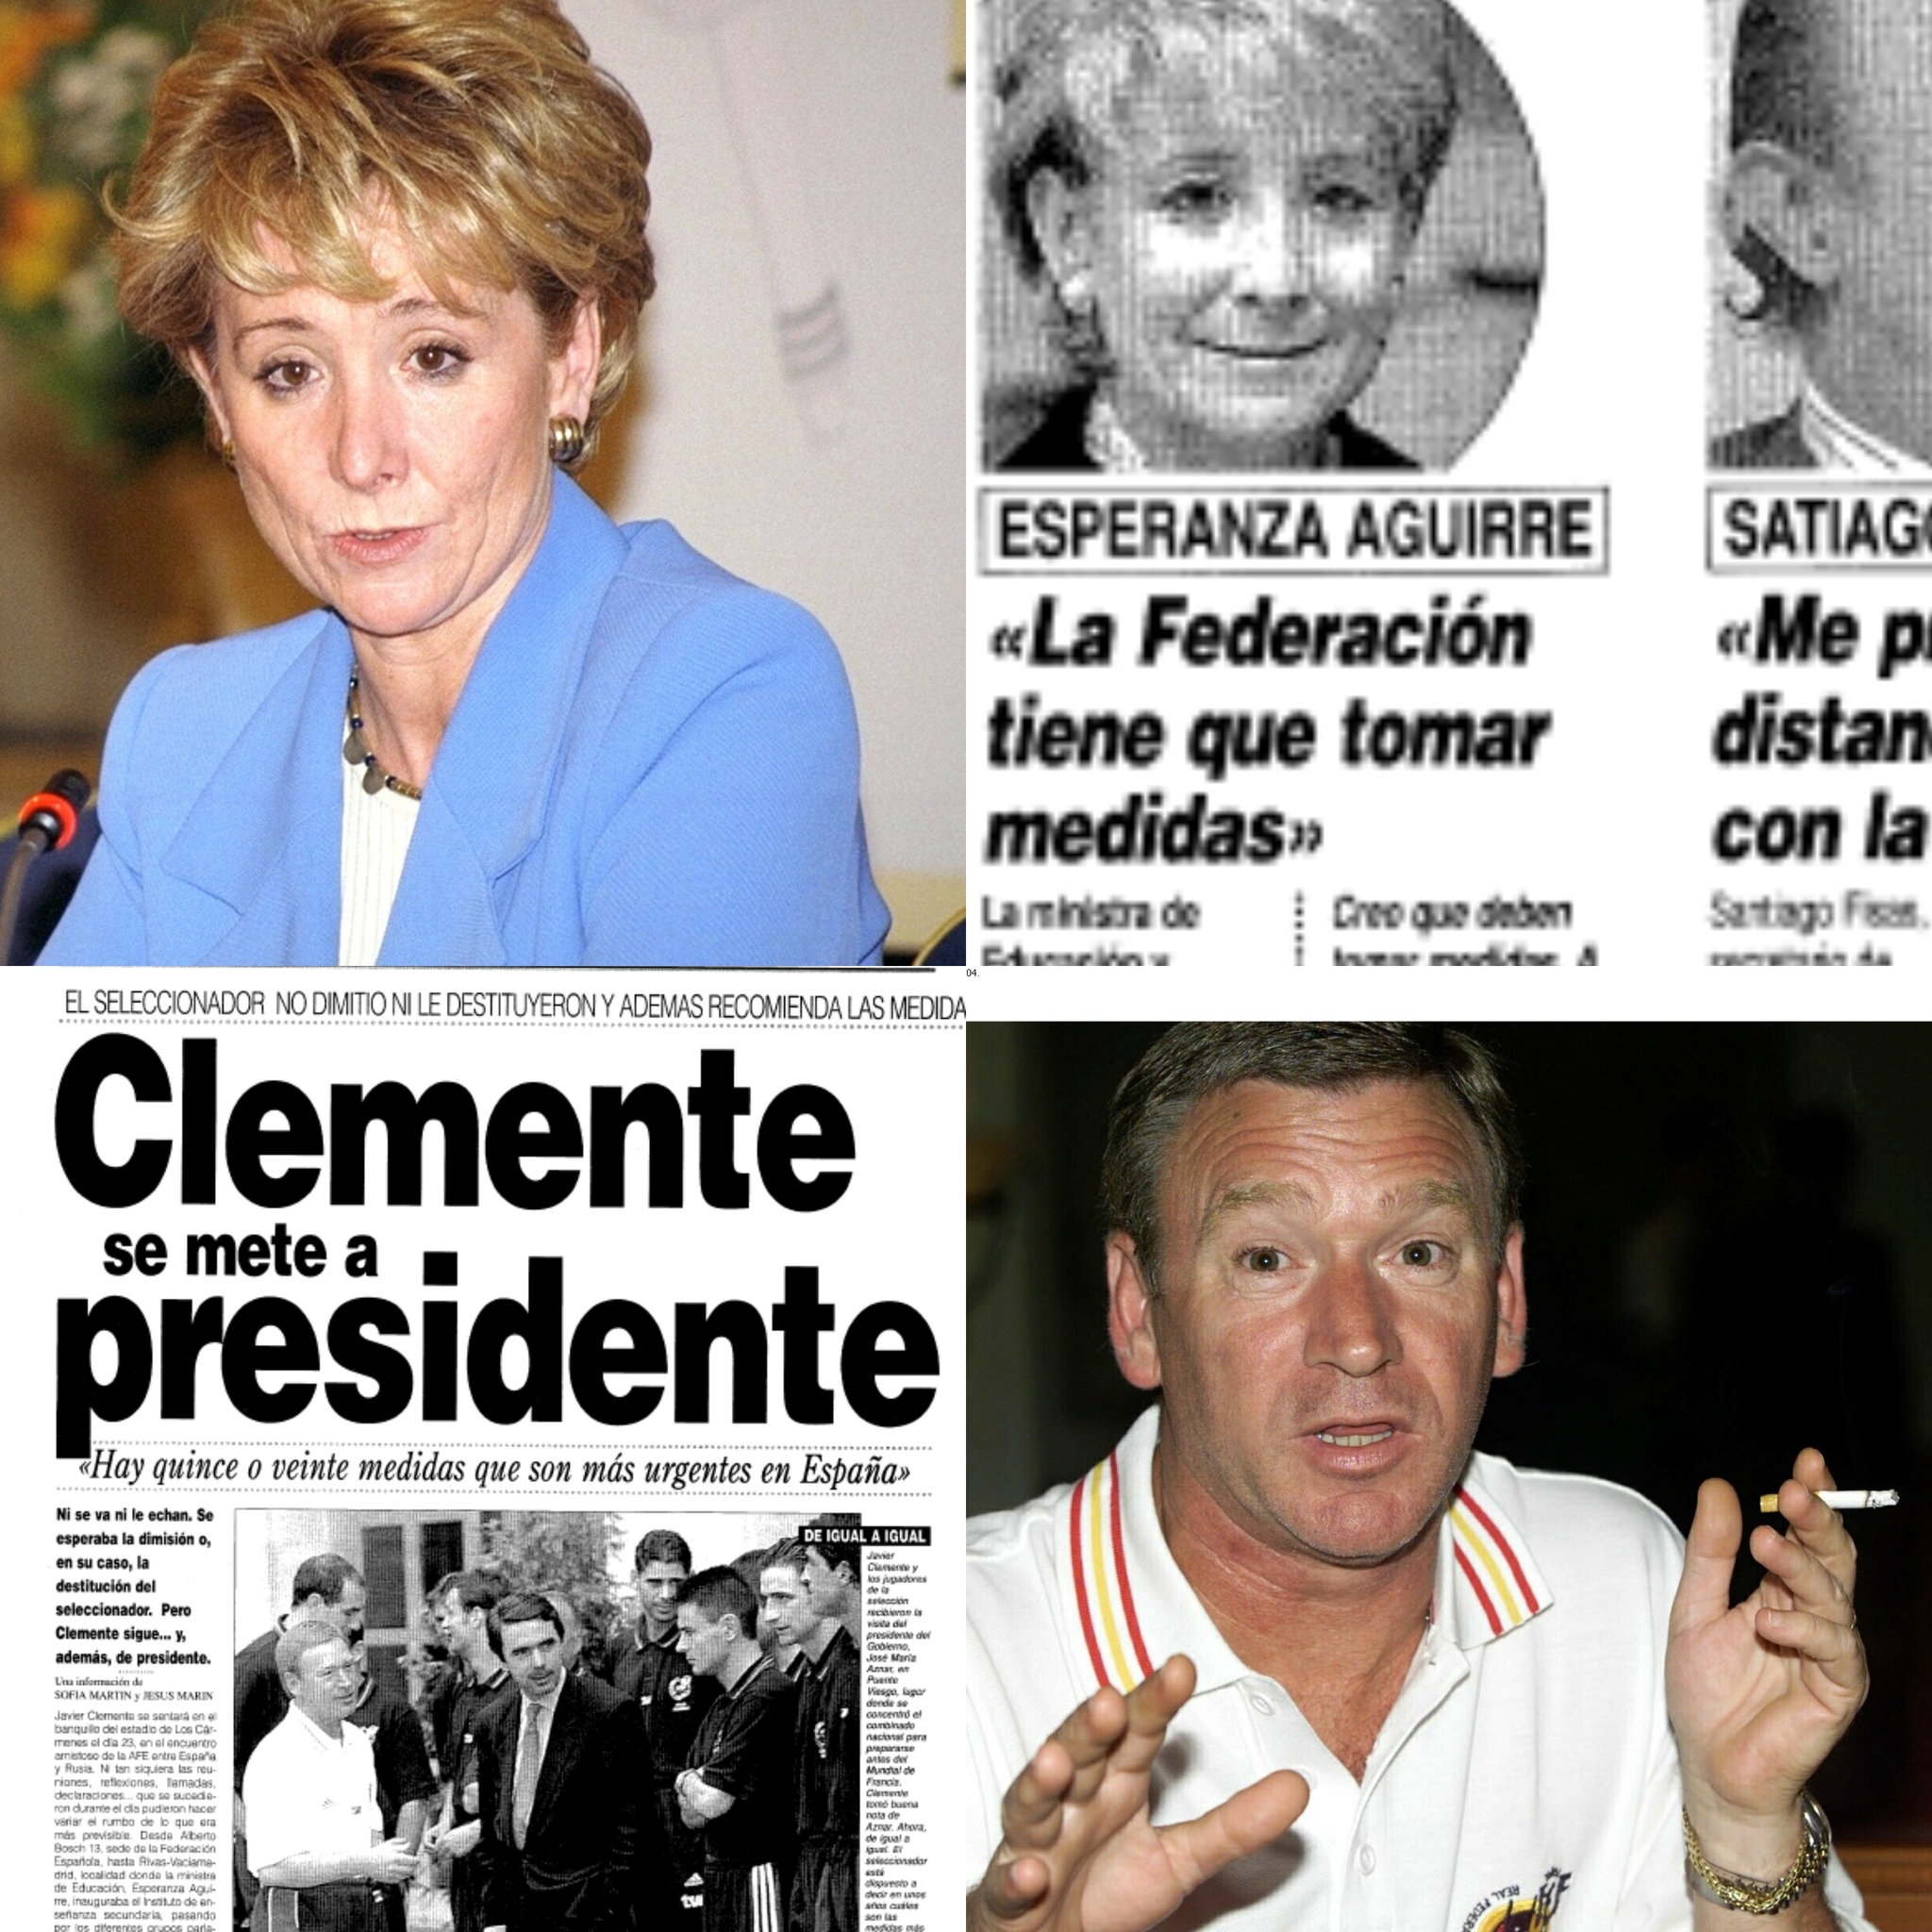 Esperanza Aguirre pidi� a Villar "tomar medidas" contra Clemente